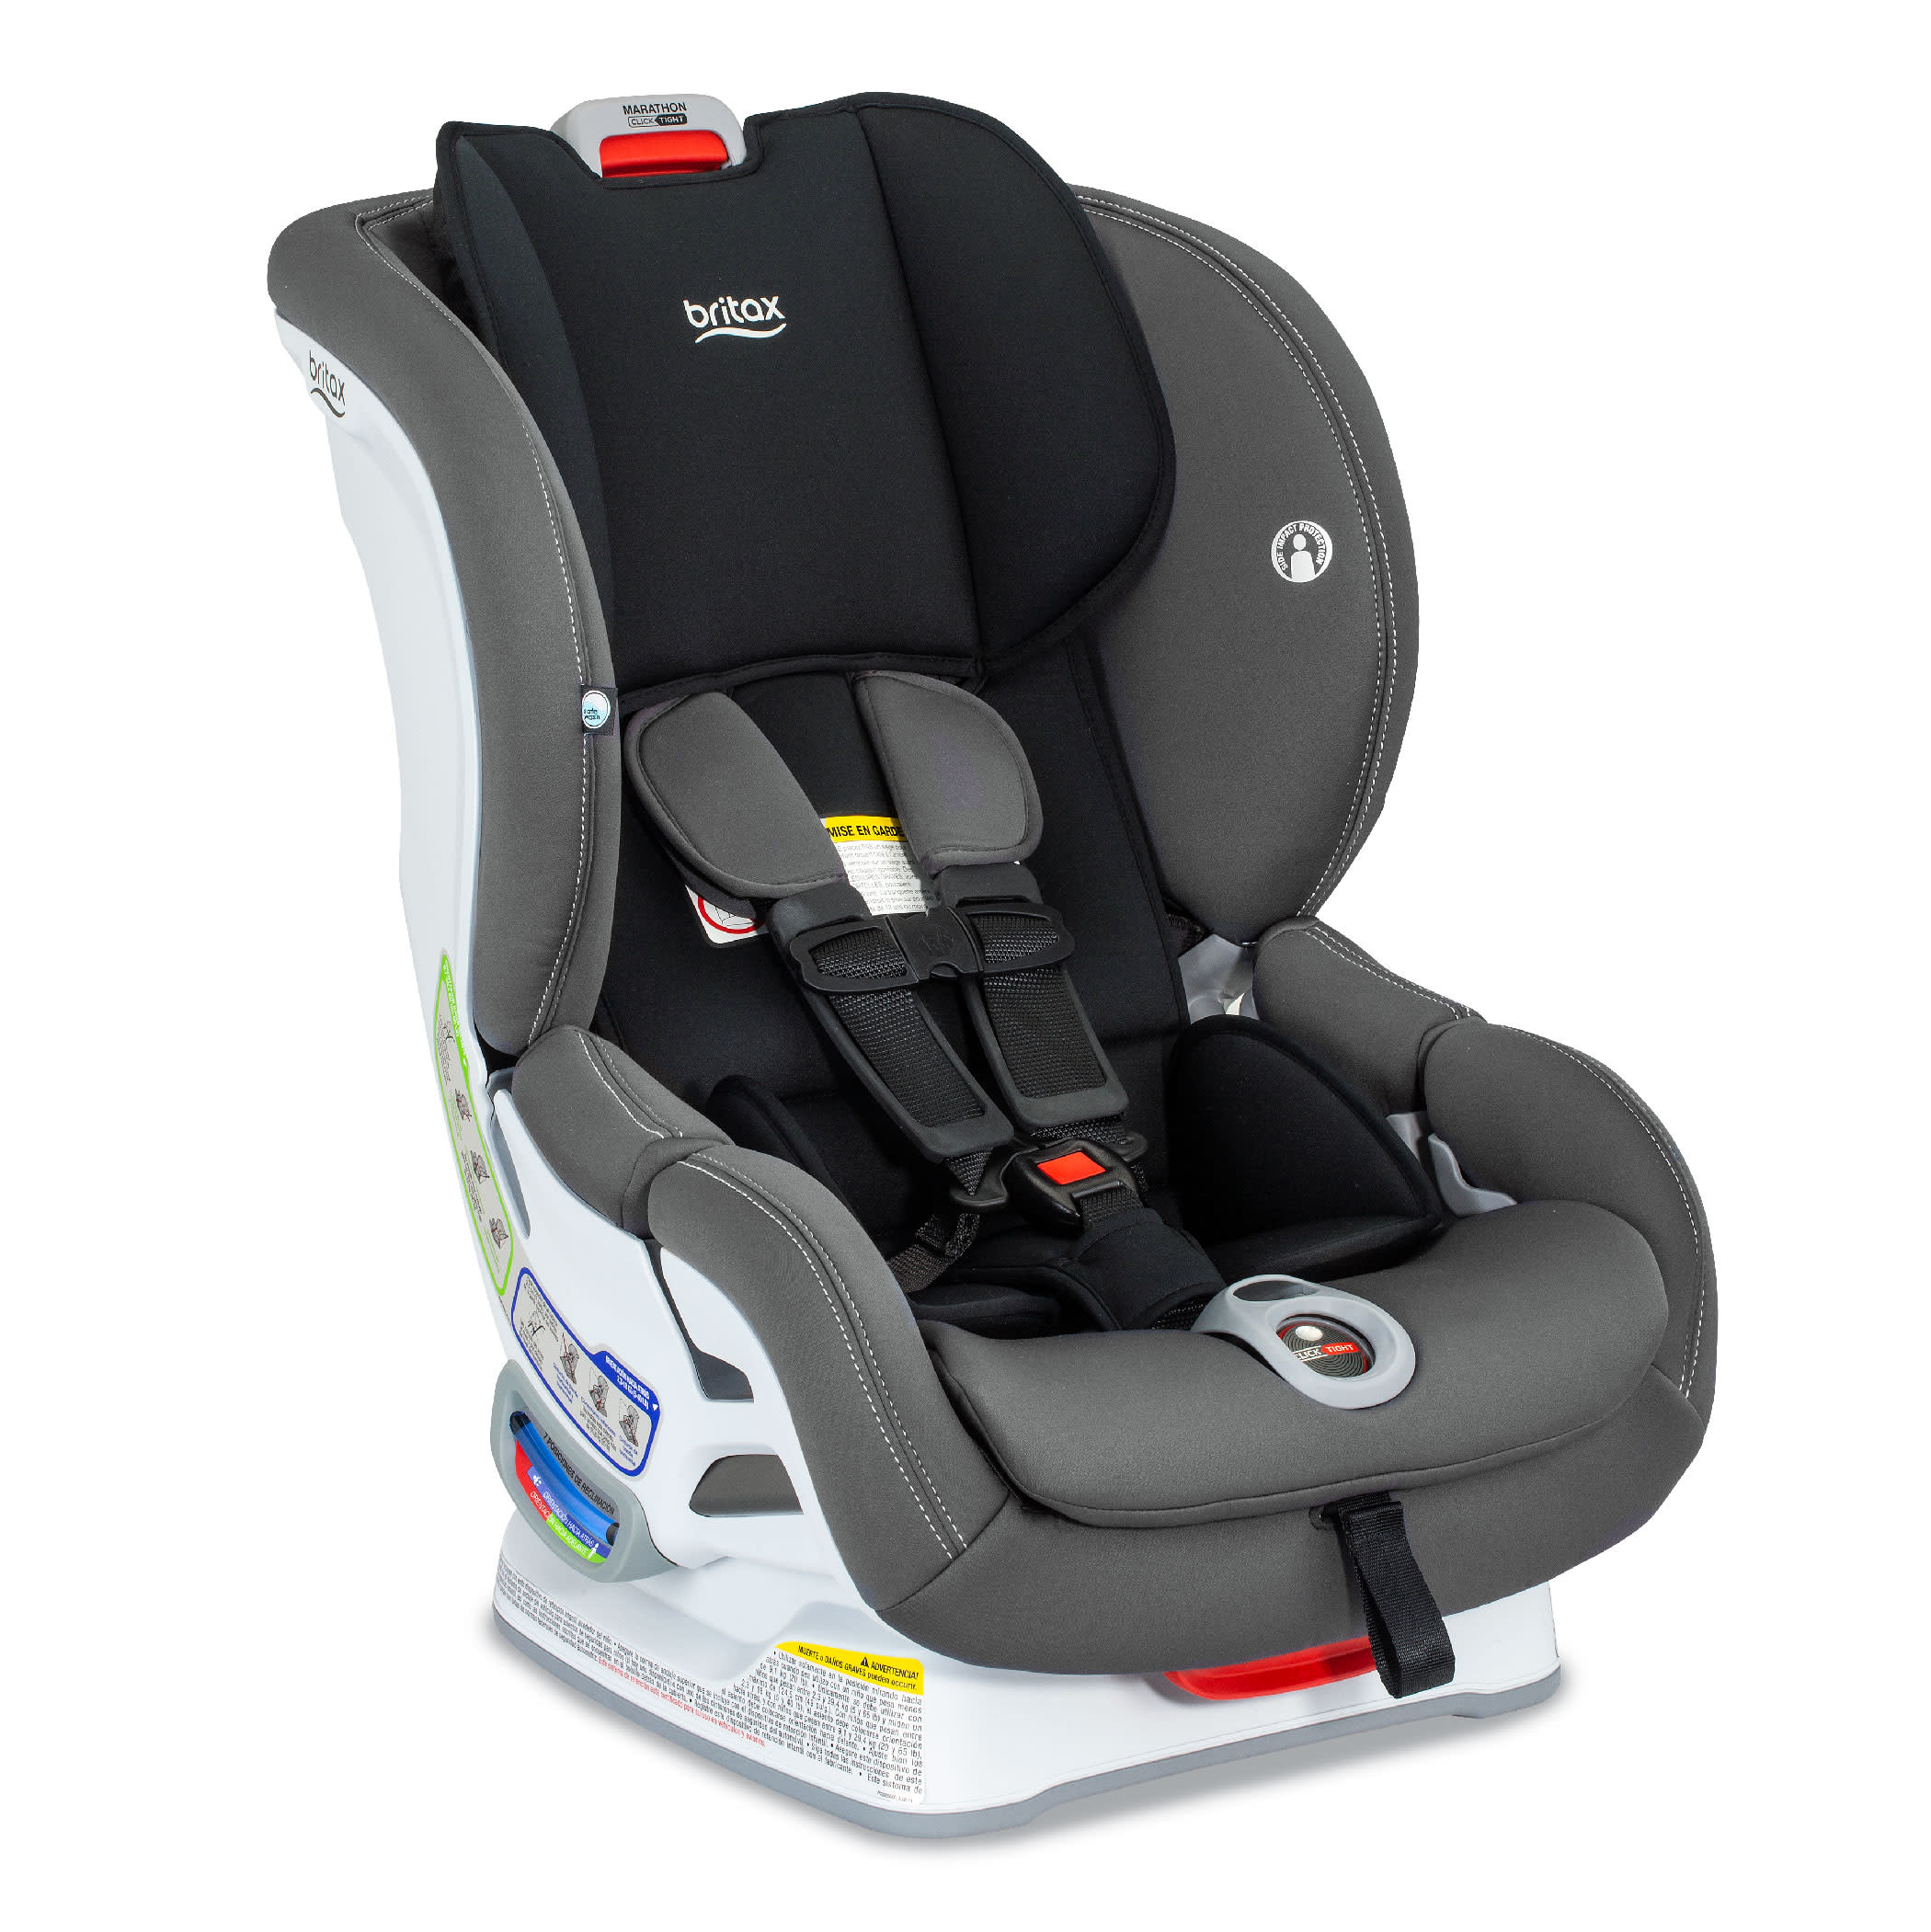 BRITAX Marathon ClickTight Convertible Car Seat - ANB Baby -$100 - $300